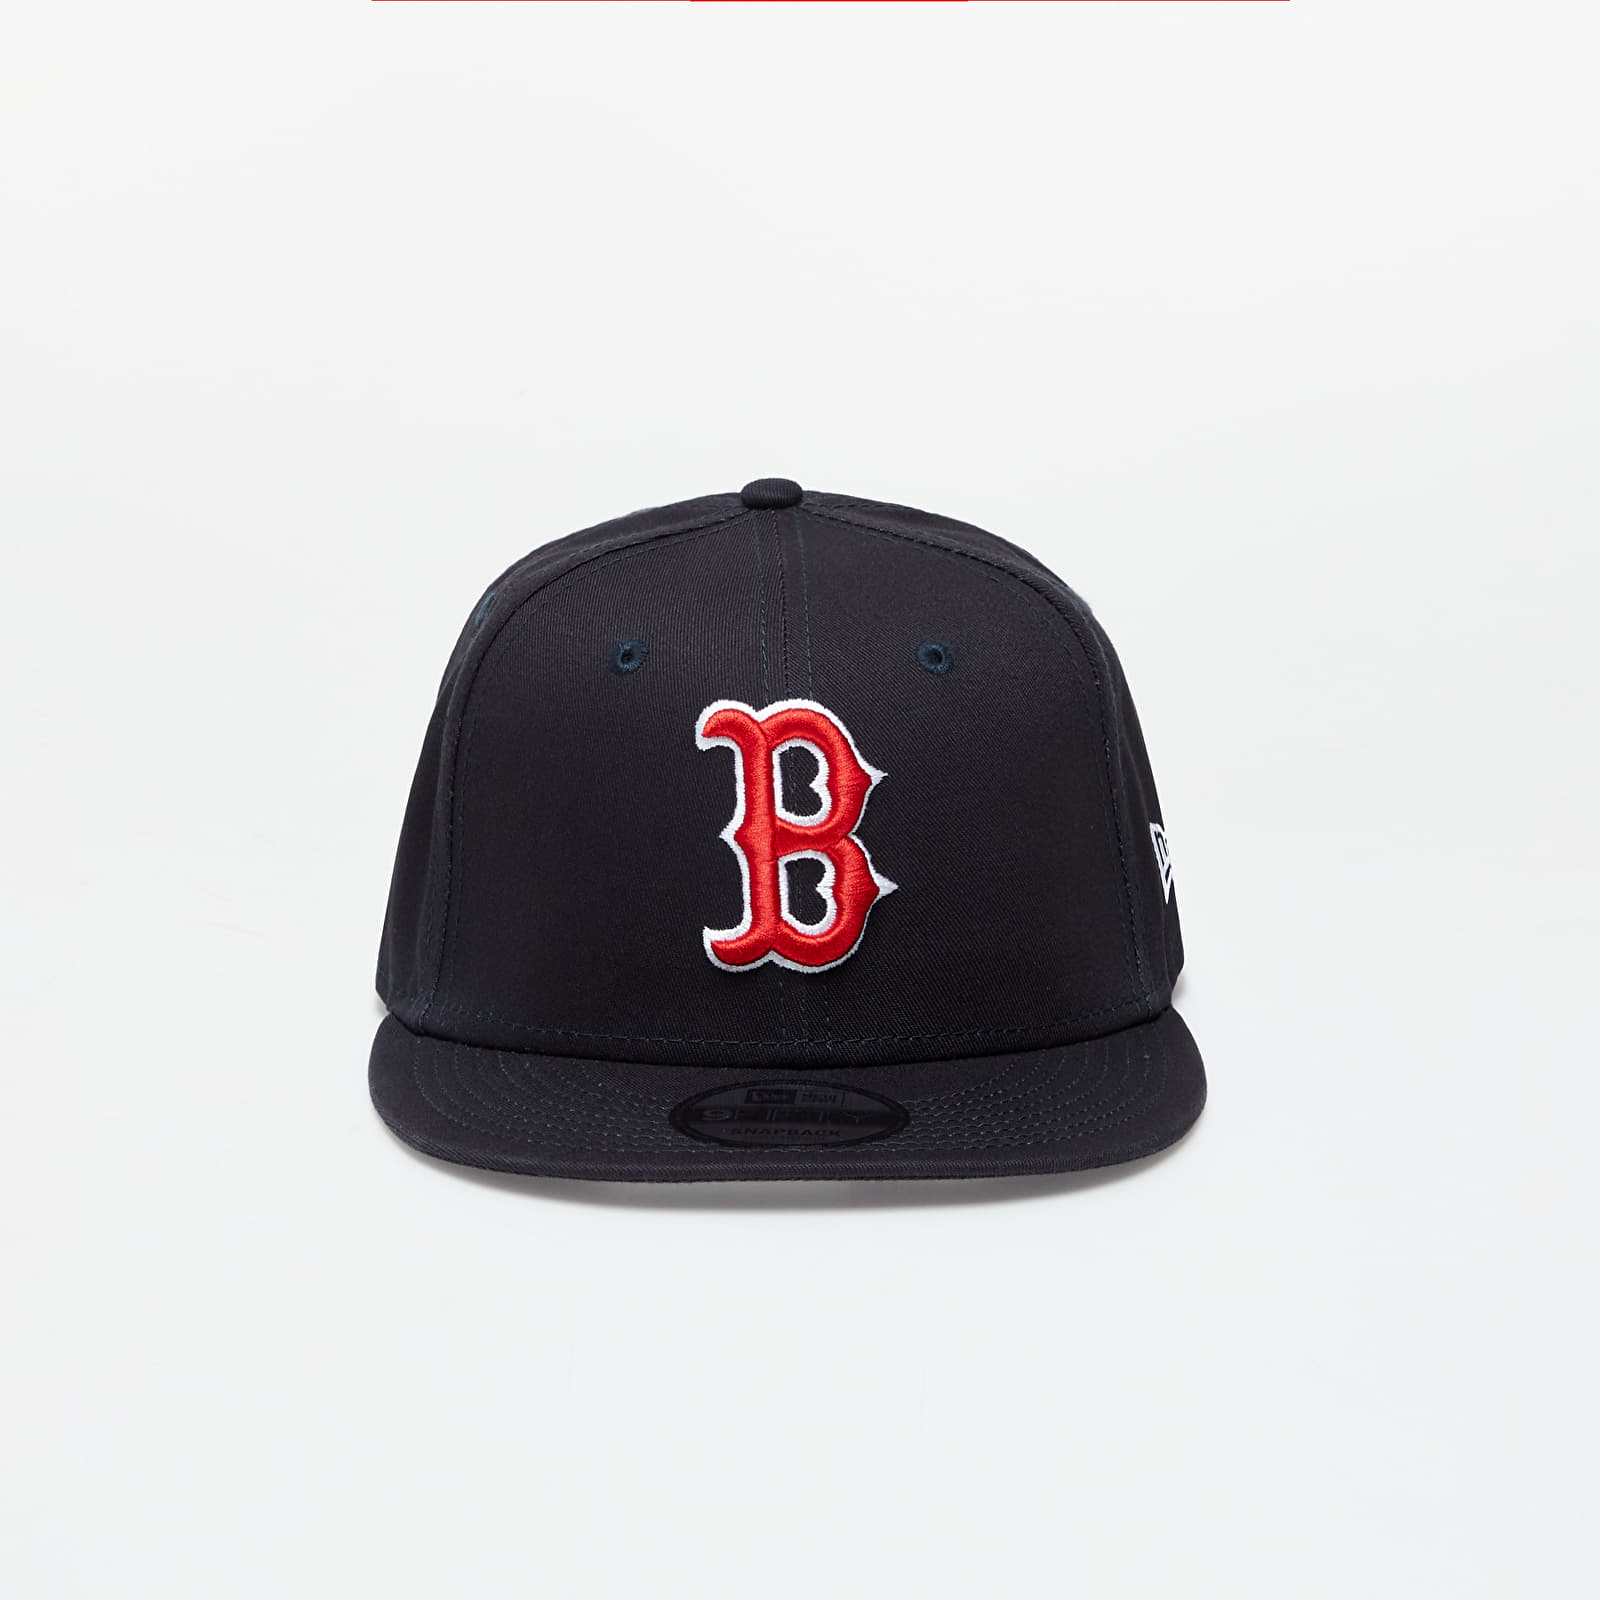 Caps New Era 9Fifty MLB Boston Red Sox Cap Navy